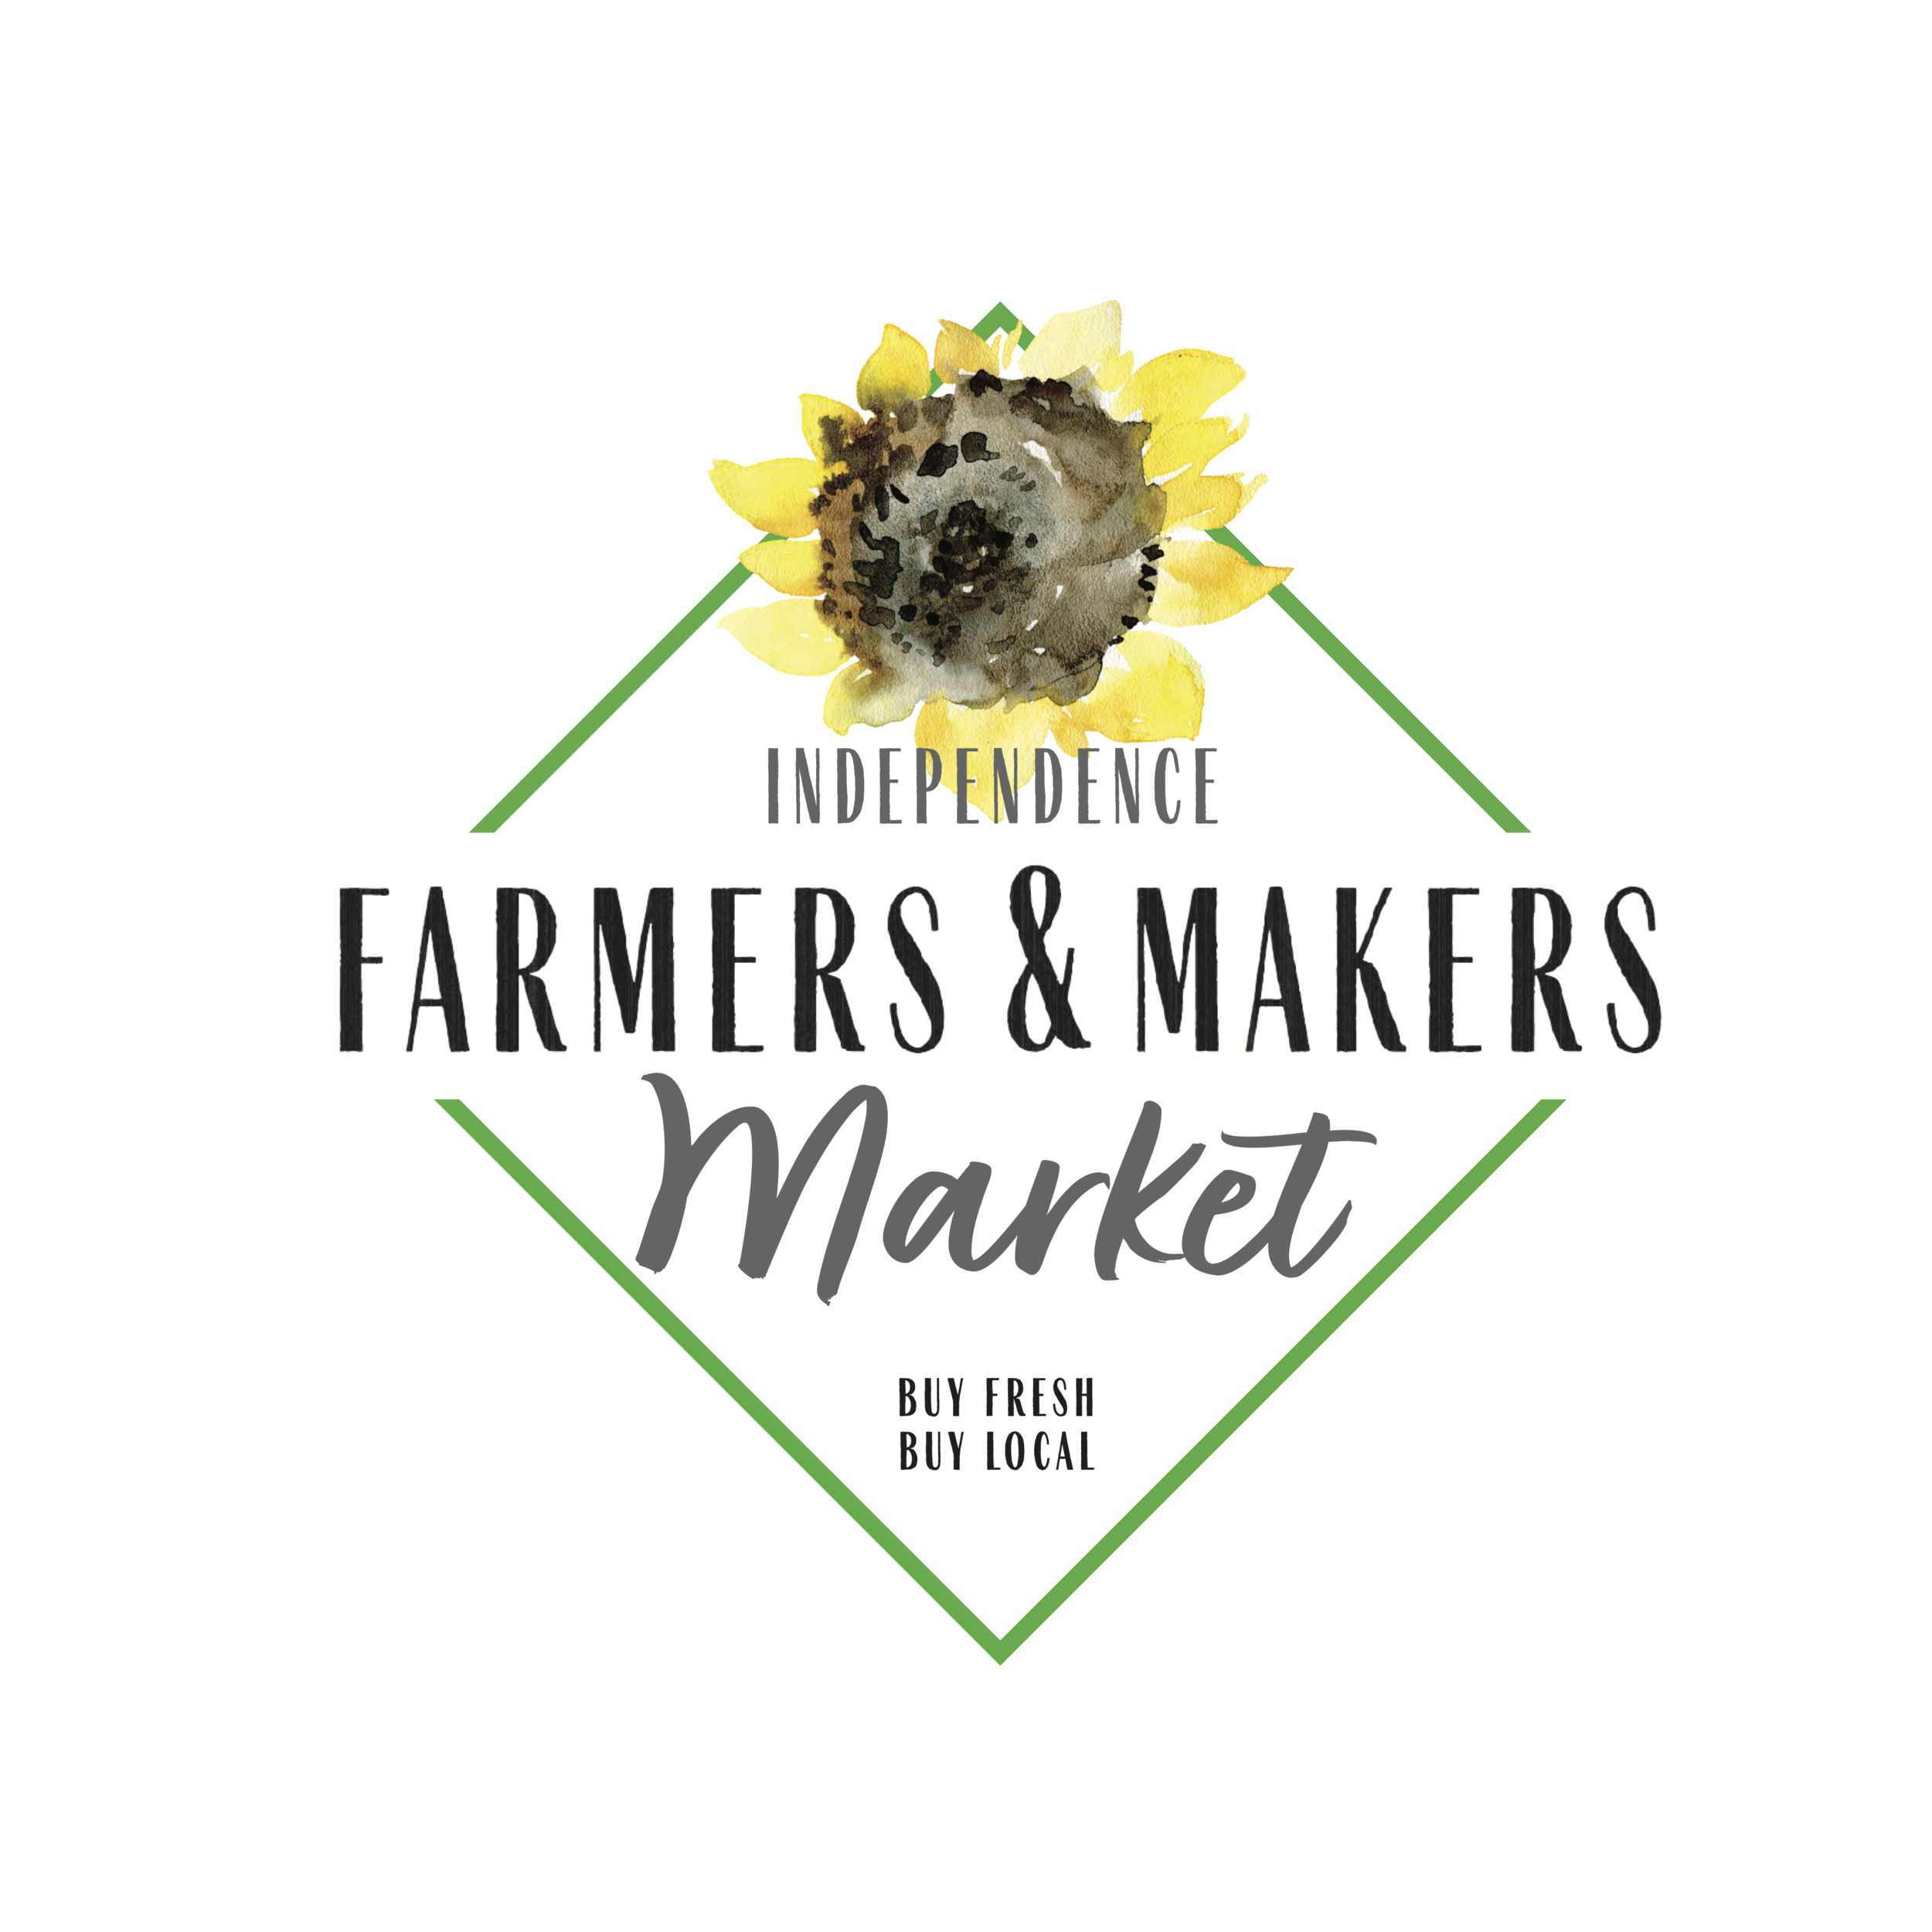 Makers Market